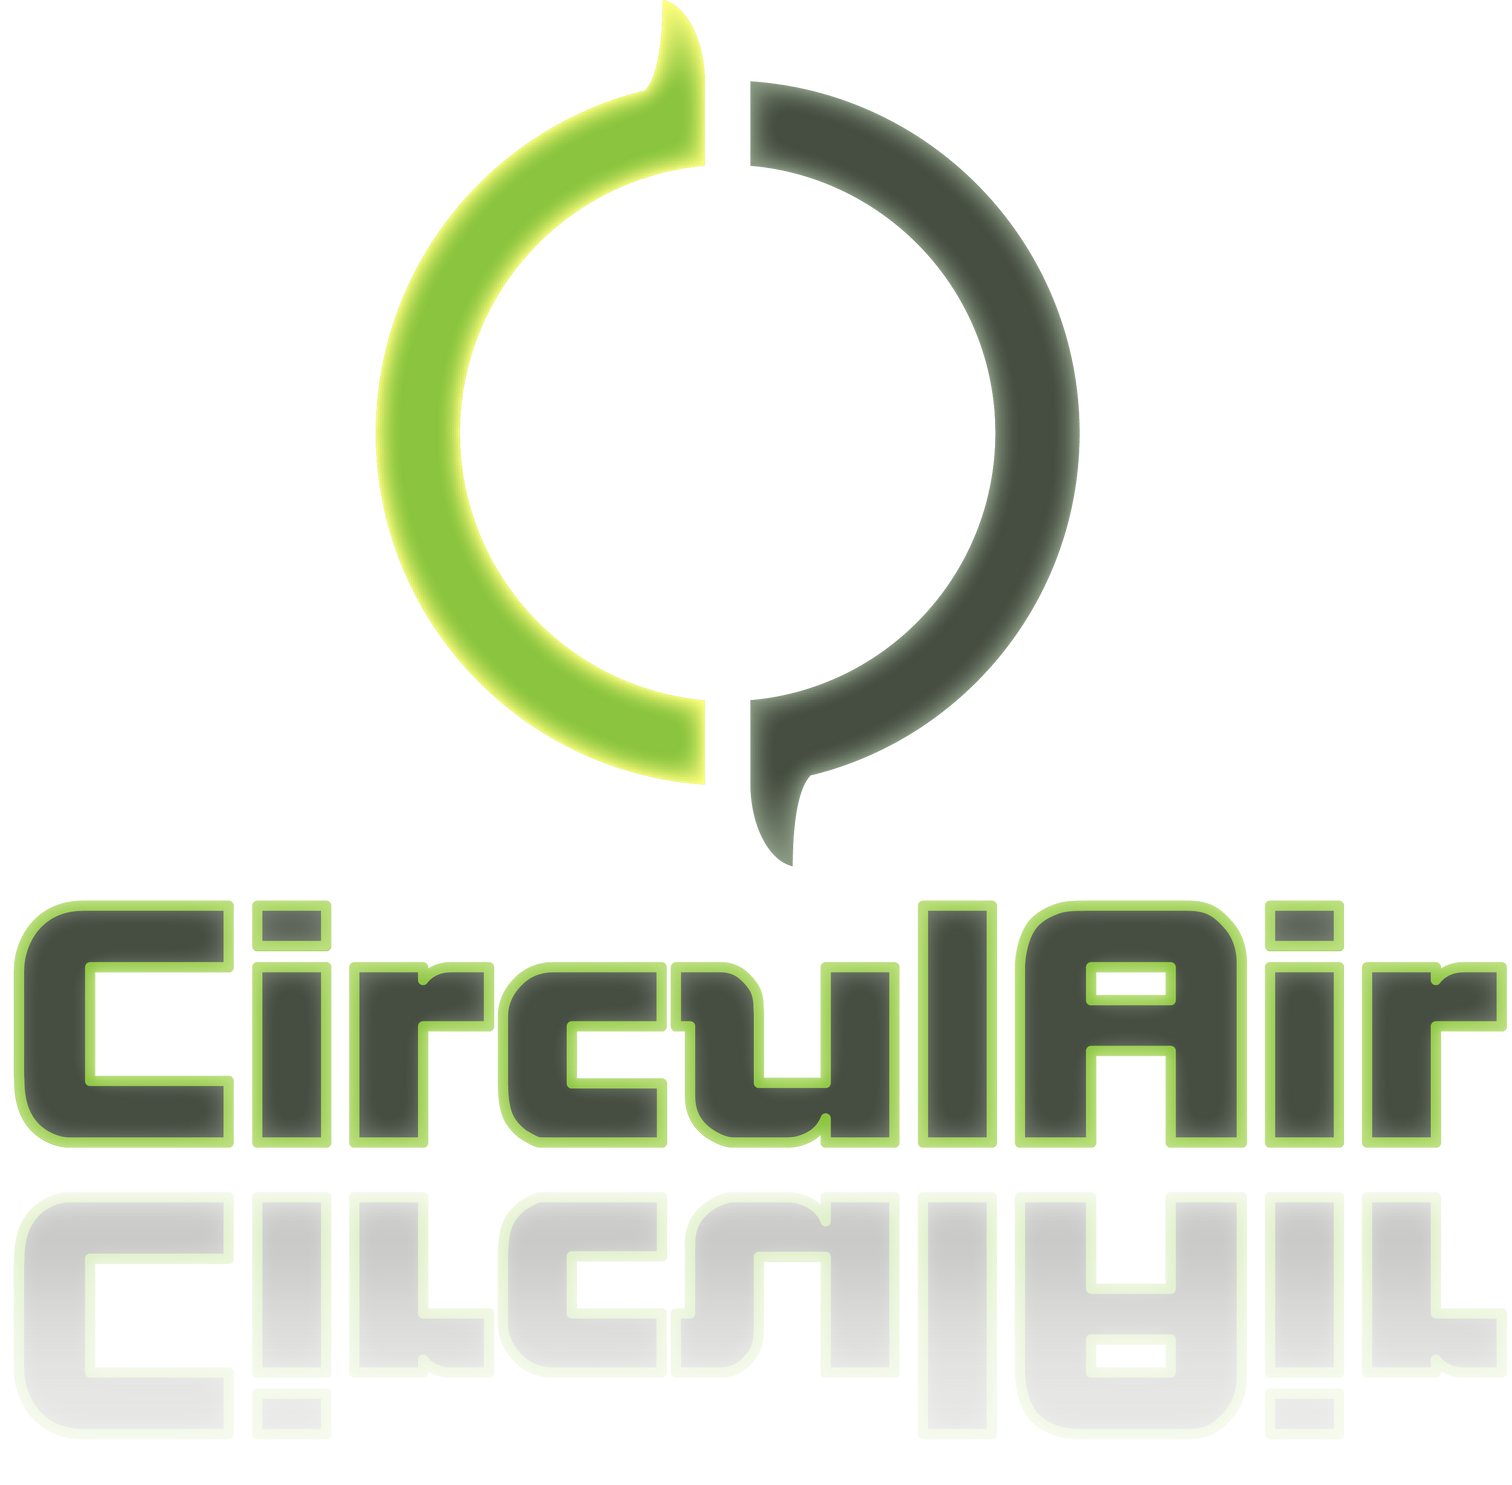 CirculAir logo